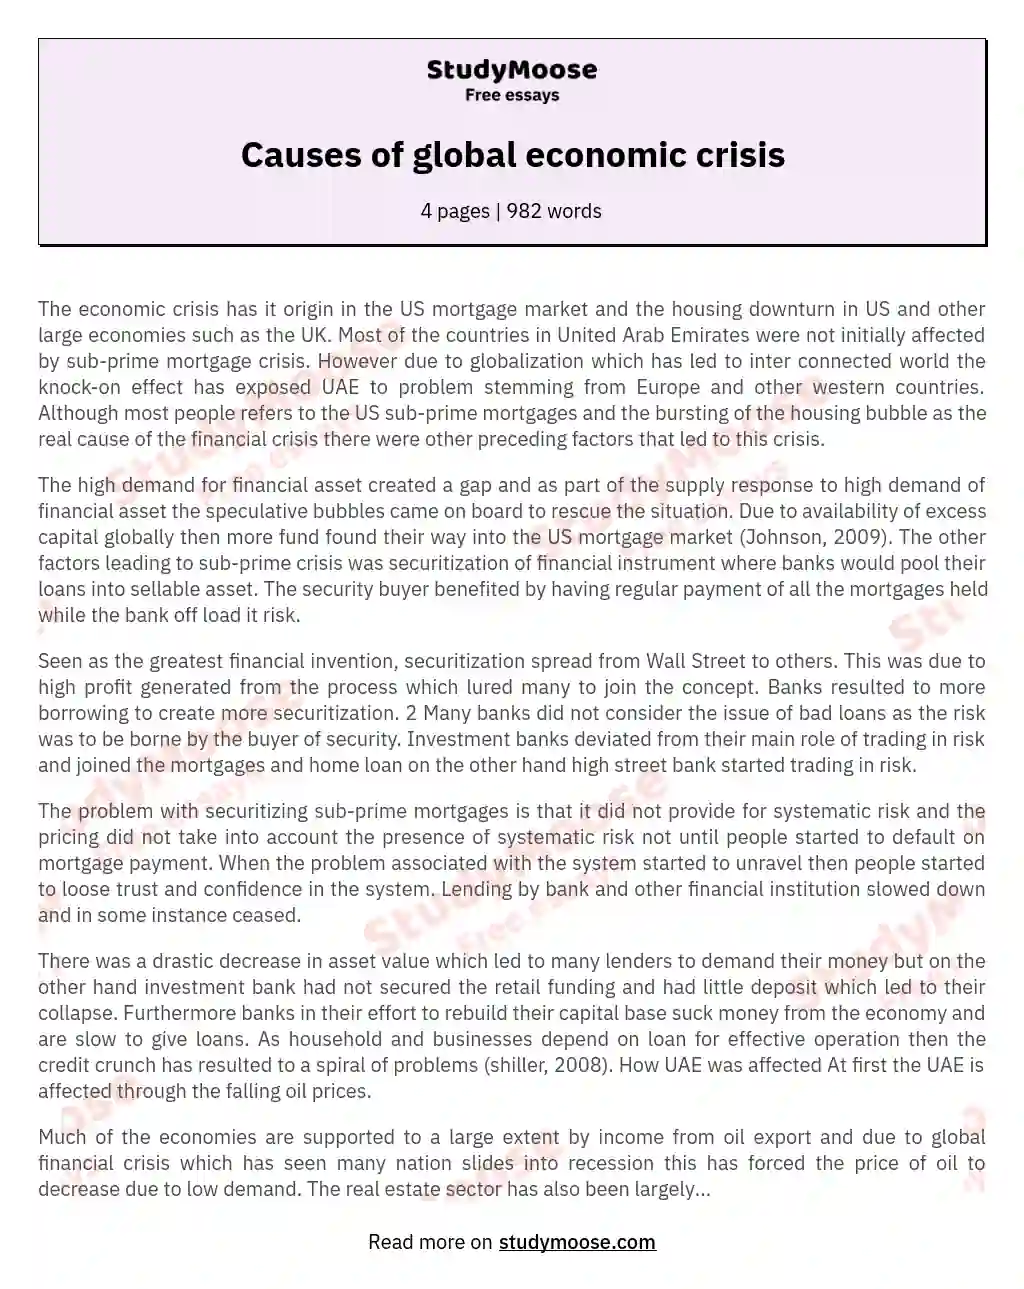 Causes of global economic crisis essay